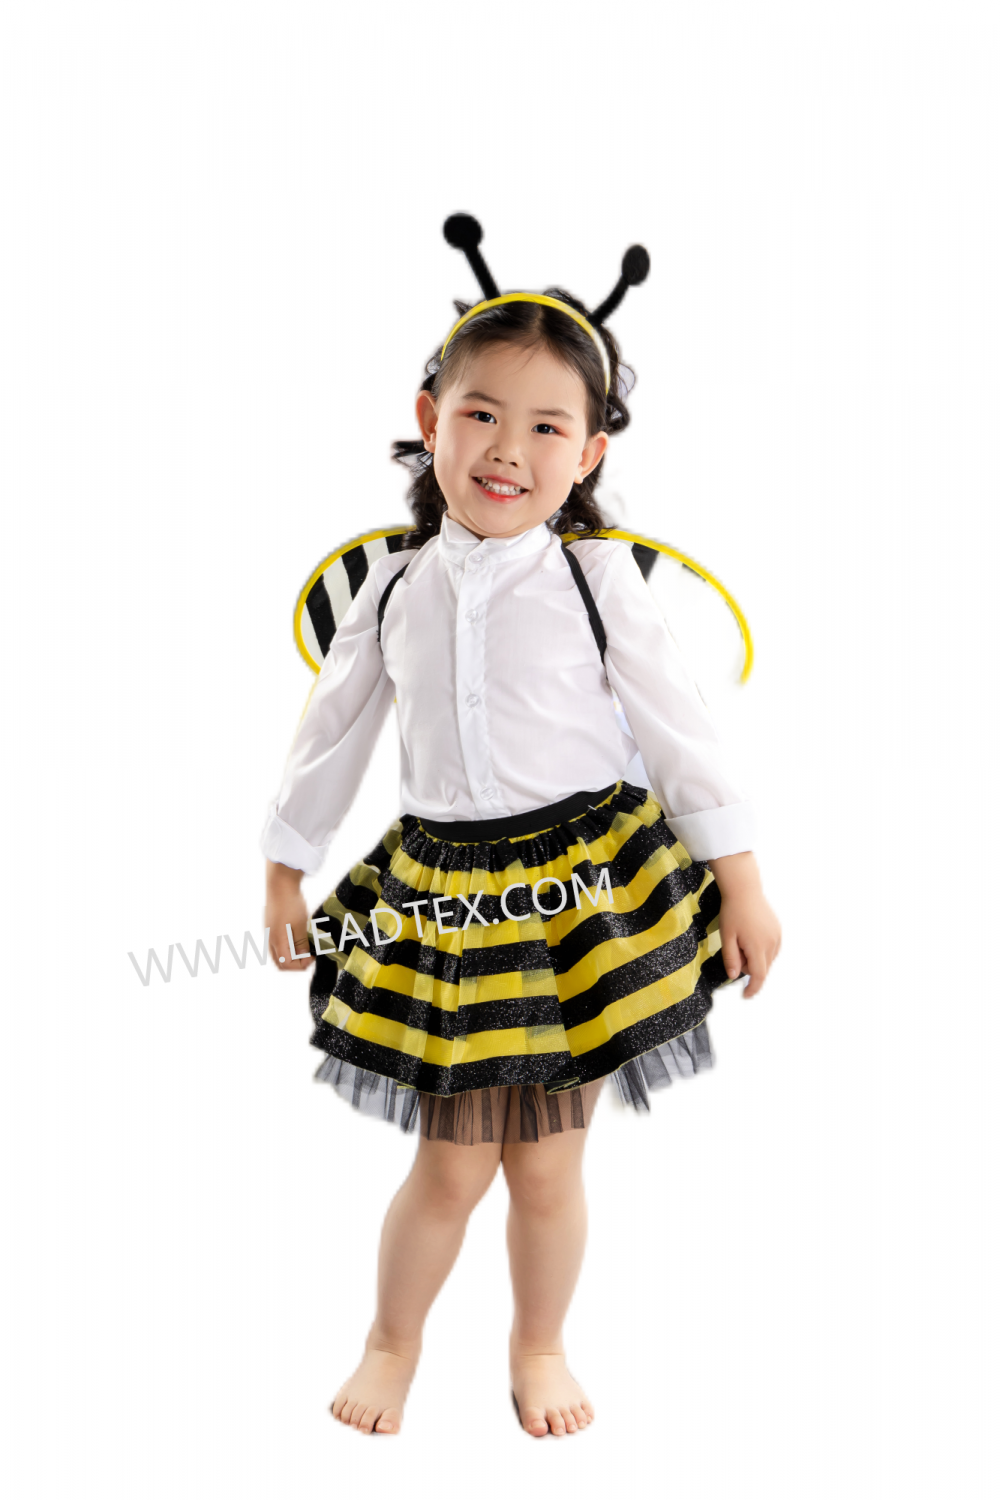 Bee costumes